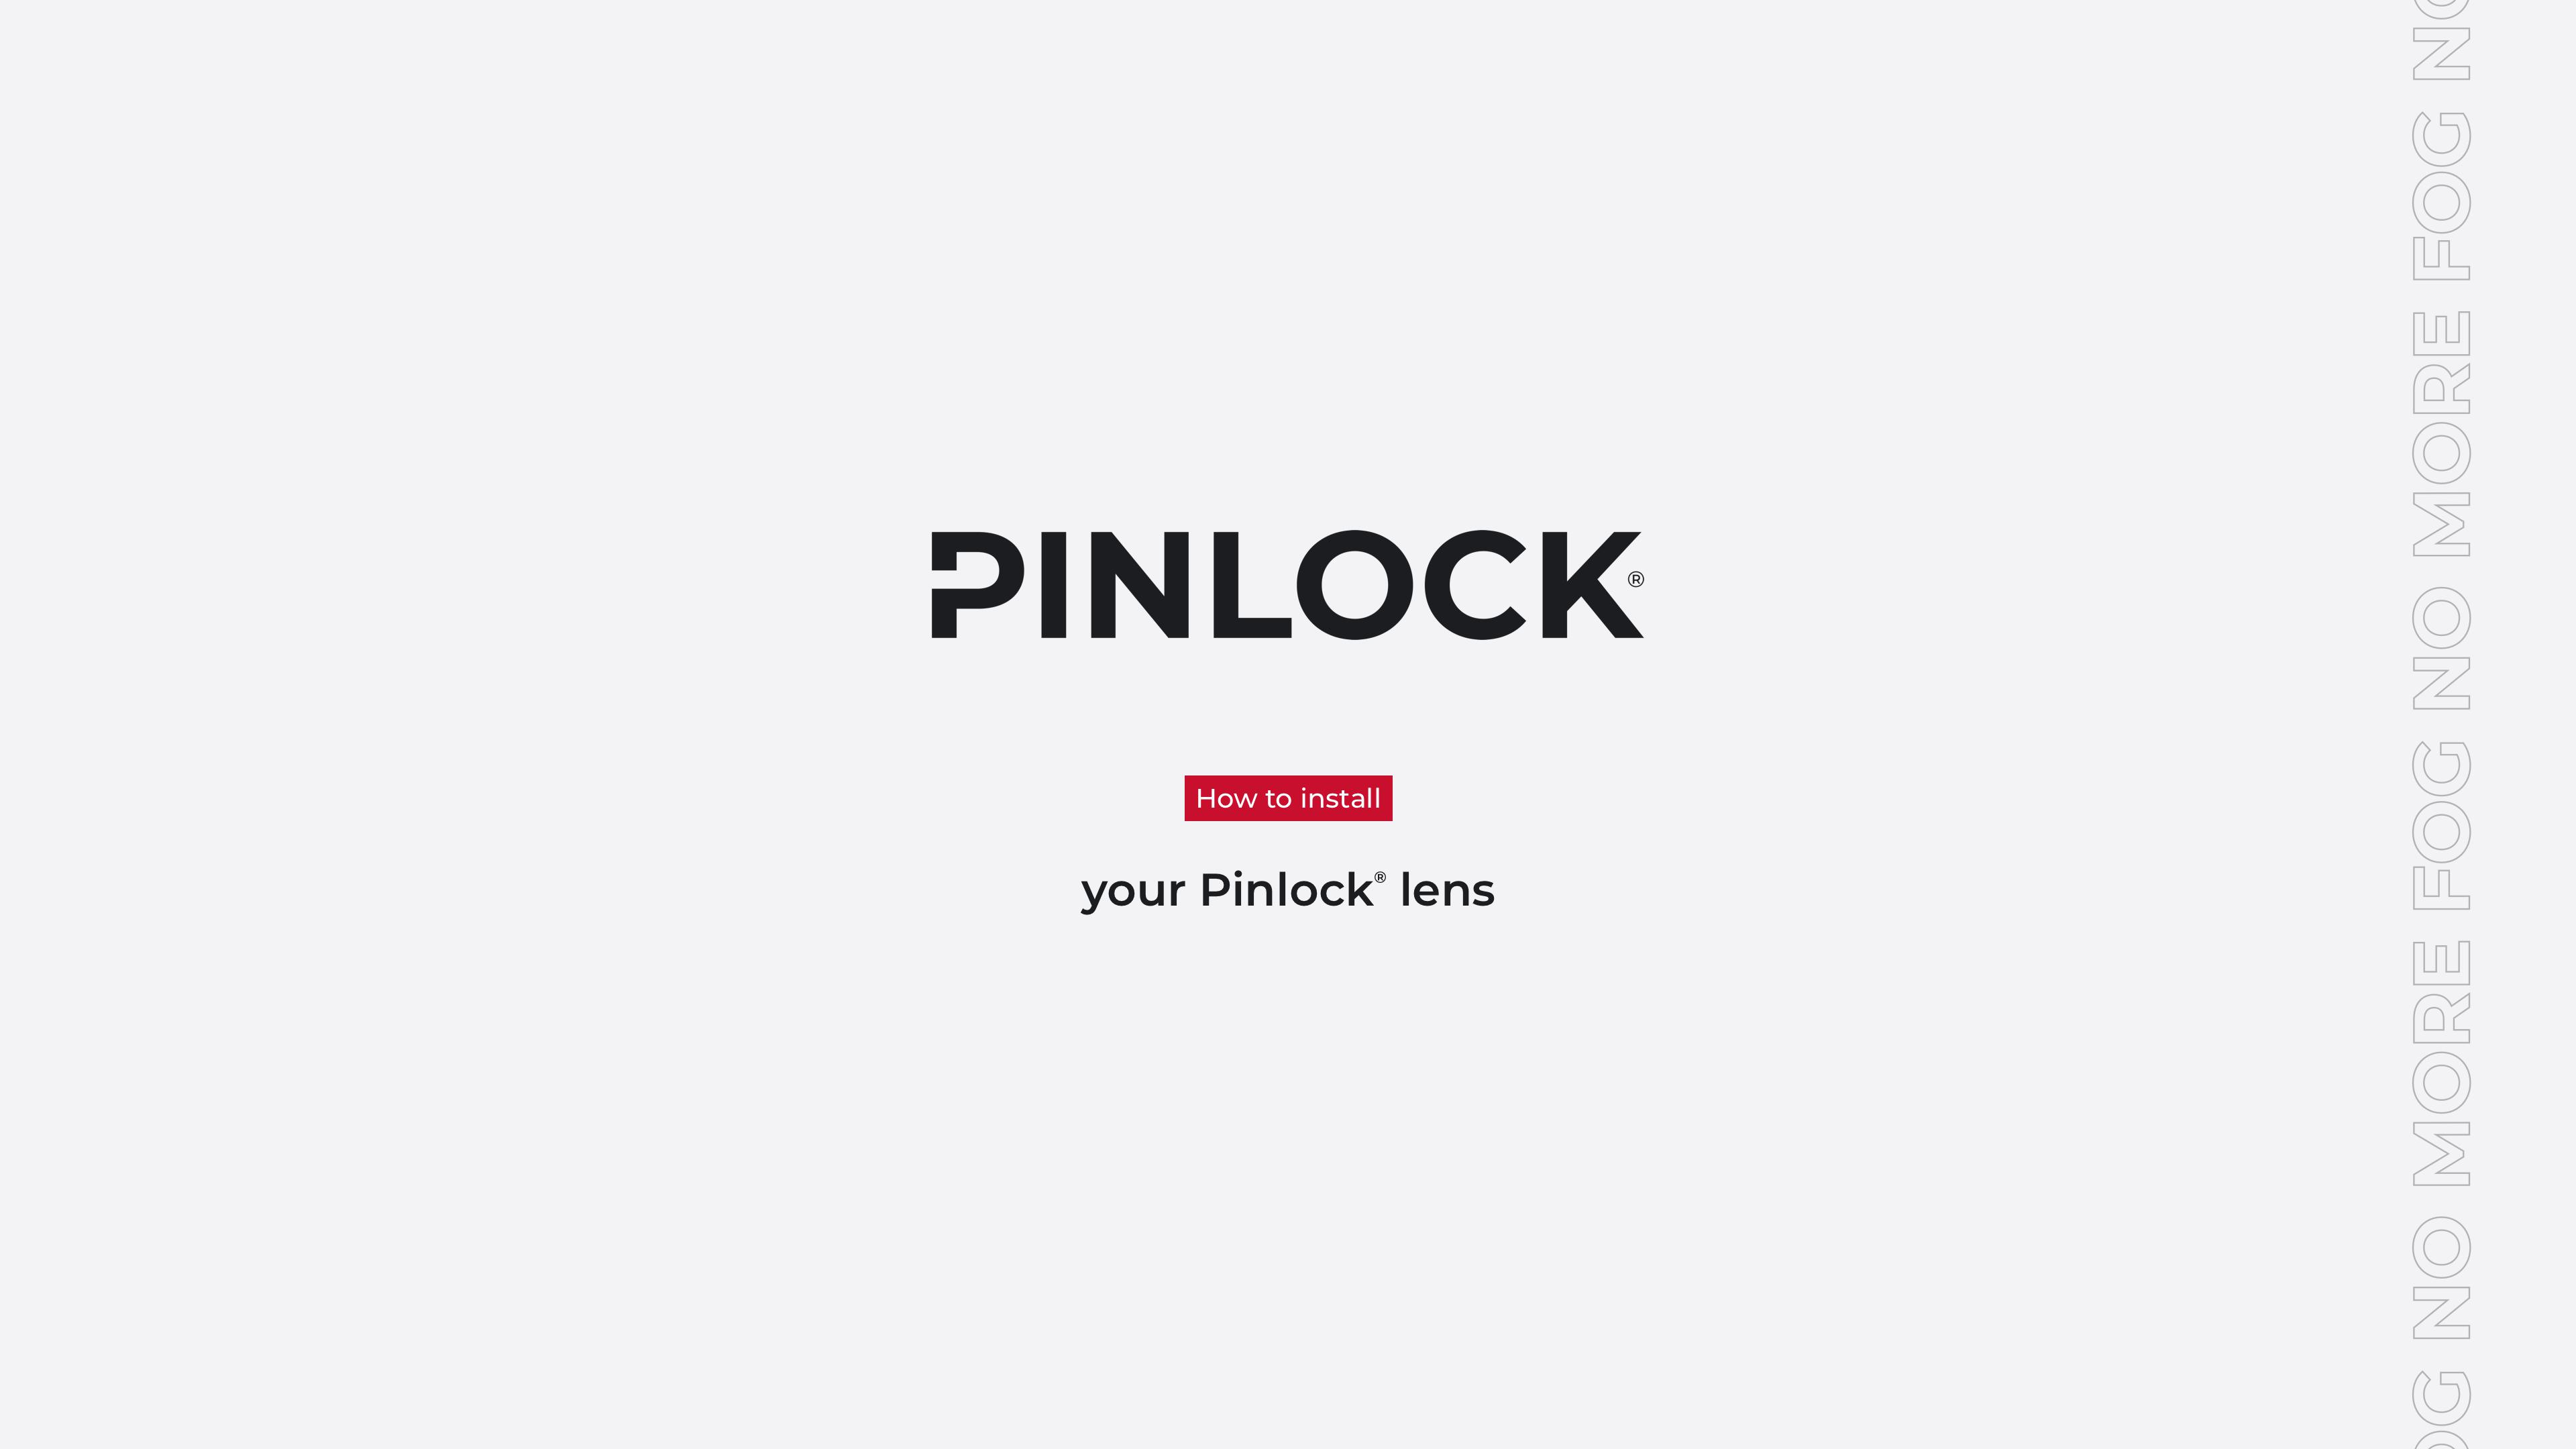 Antifog Pinlock Helmet Visor Anti-Fog Universal Pinlock Film - Trendyol